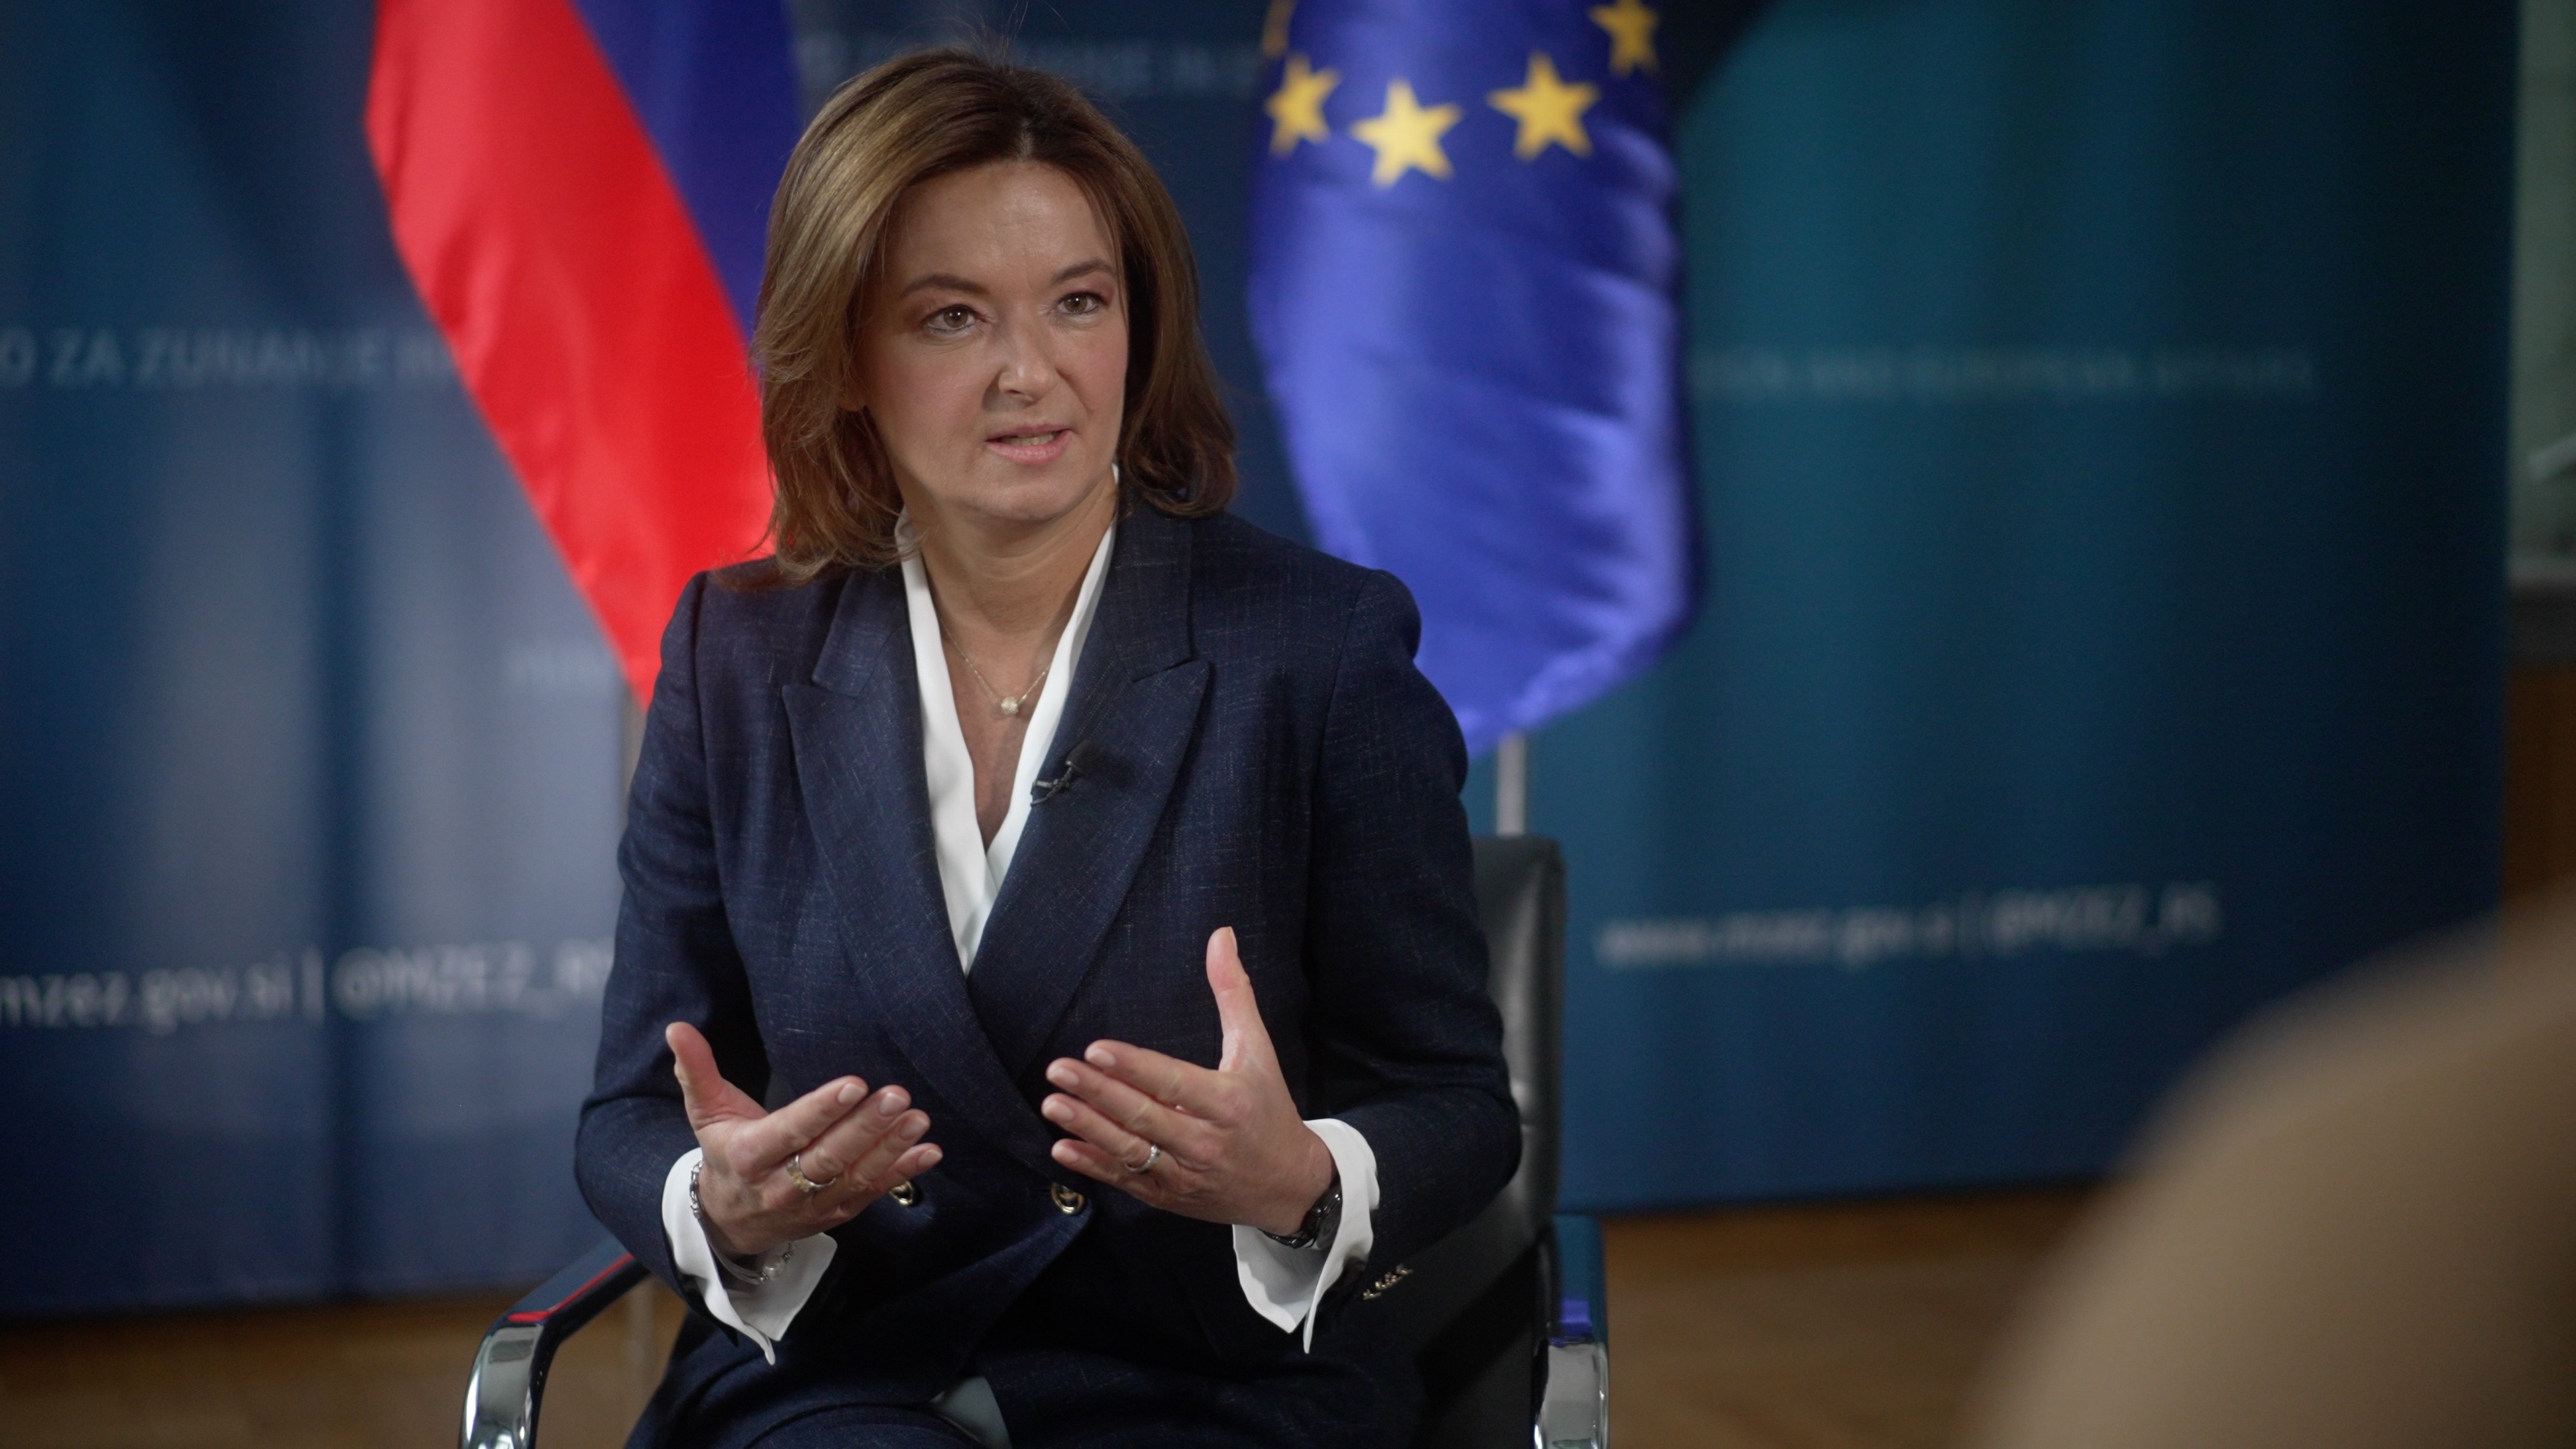 Slovenia's Foreign Minister Tanja Fajon says that the EU is not in crisis despite recent challenges./Aljosa Milenkovic/CGTN